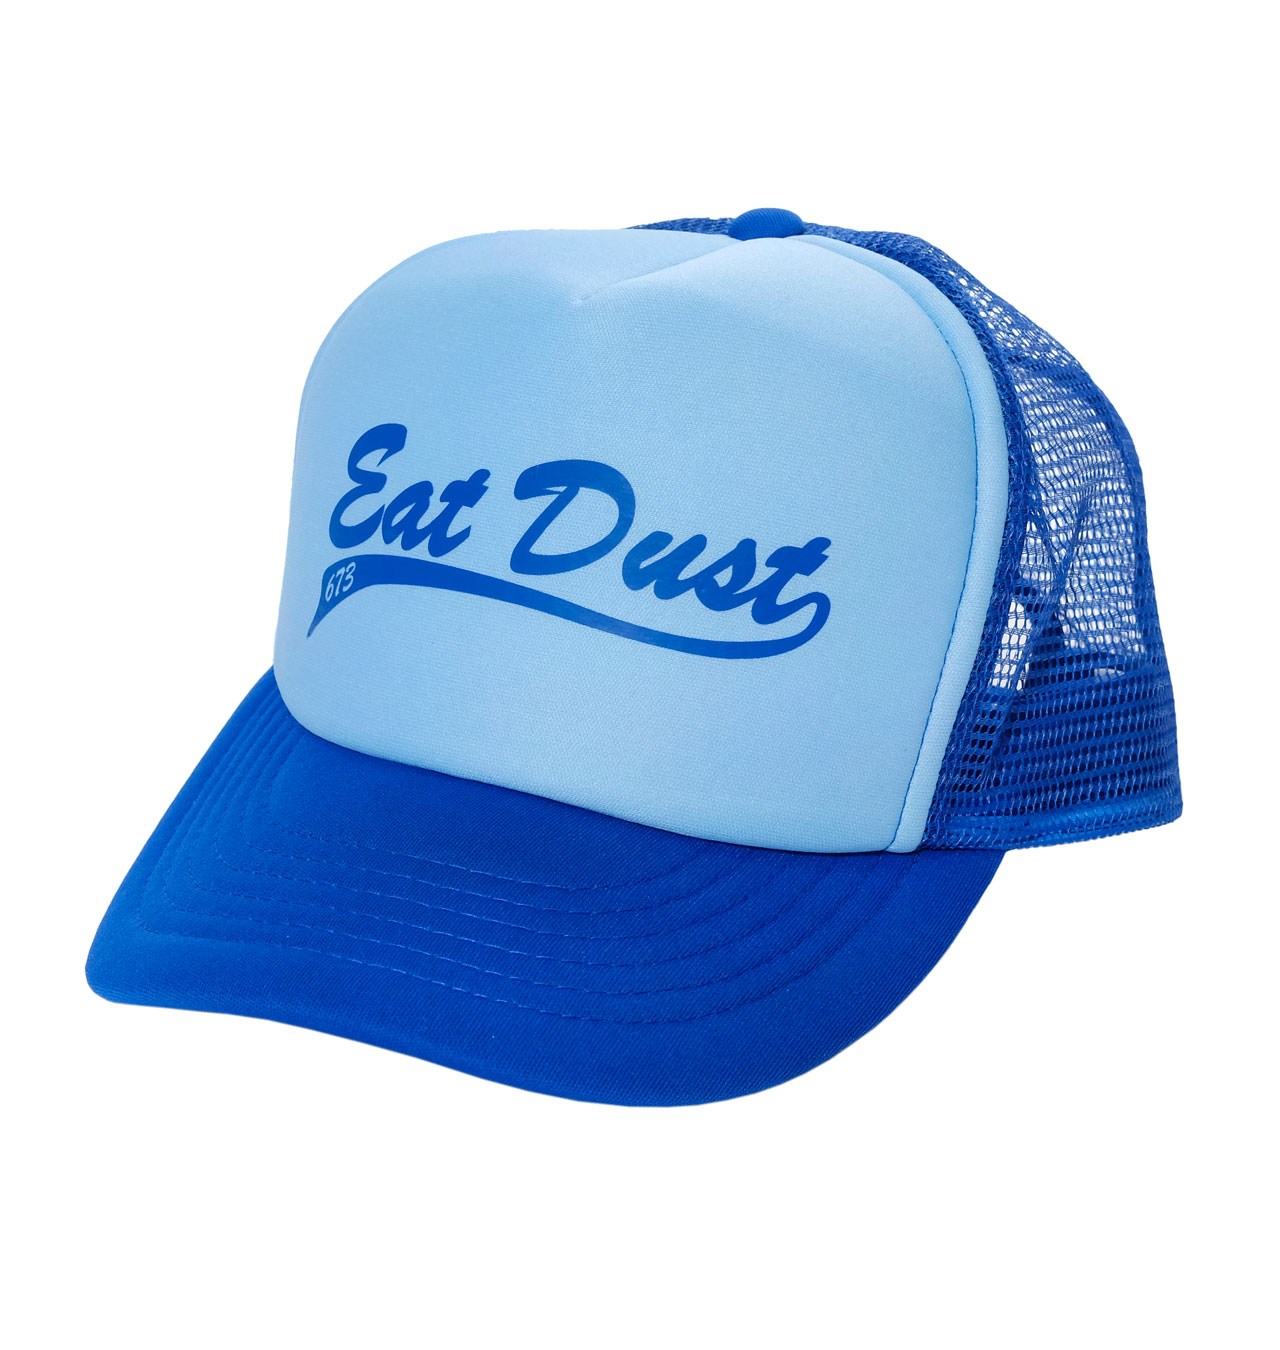 Eat Dust - Baseball Logo Trucker Cap - Navy/Blue